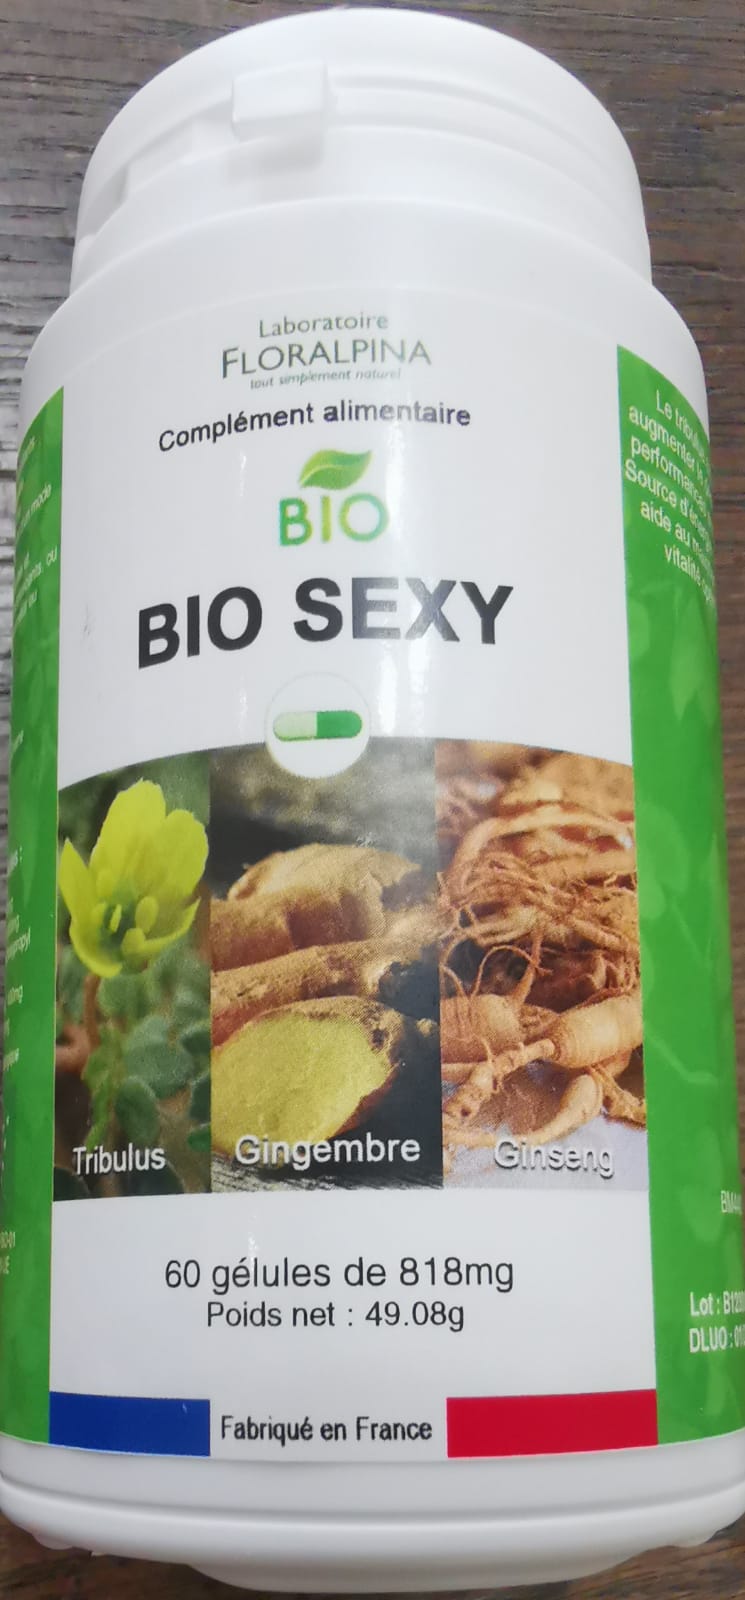 Bio sexy 60 gélules Floralpina